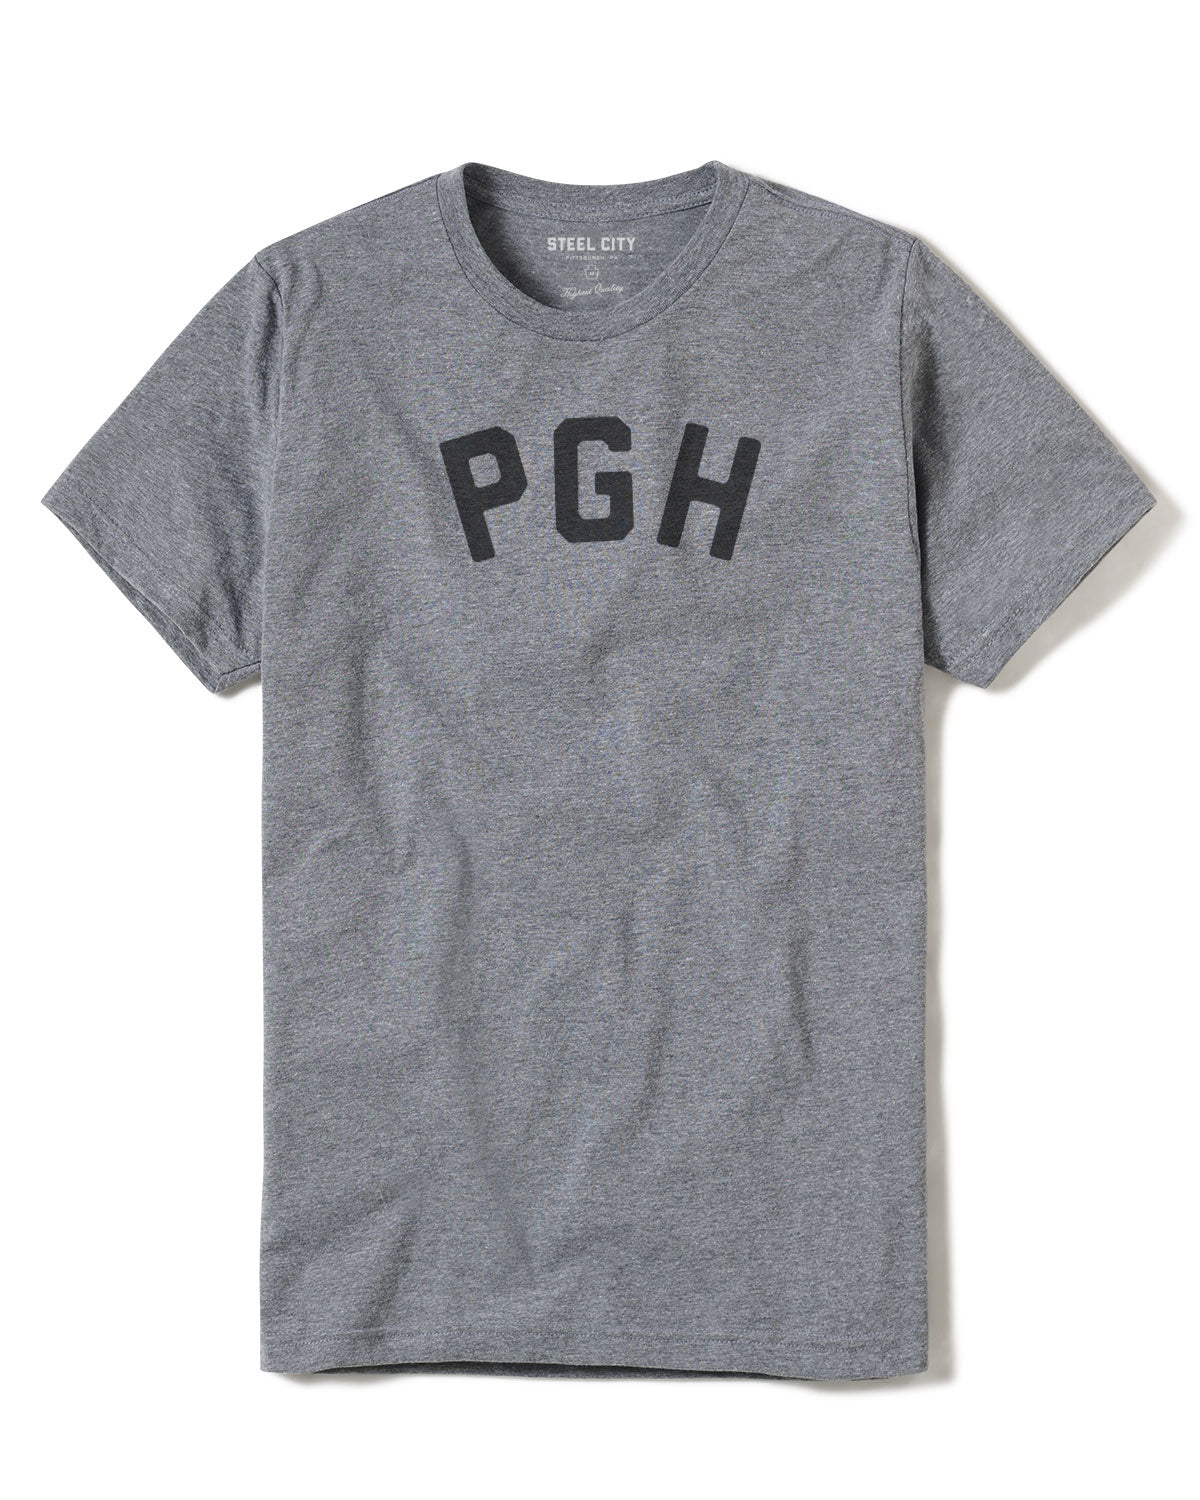 PGH T-shirt | Steel City Brand | Pittsburgh Tee